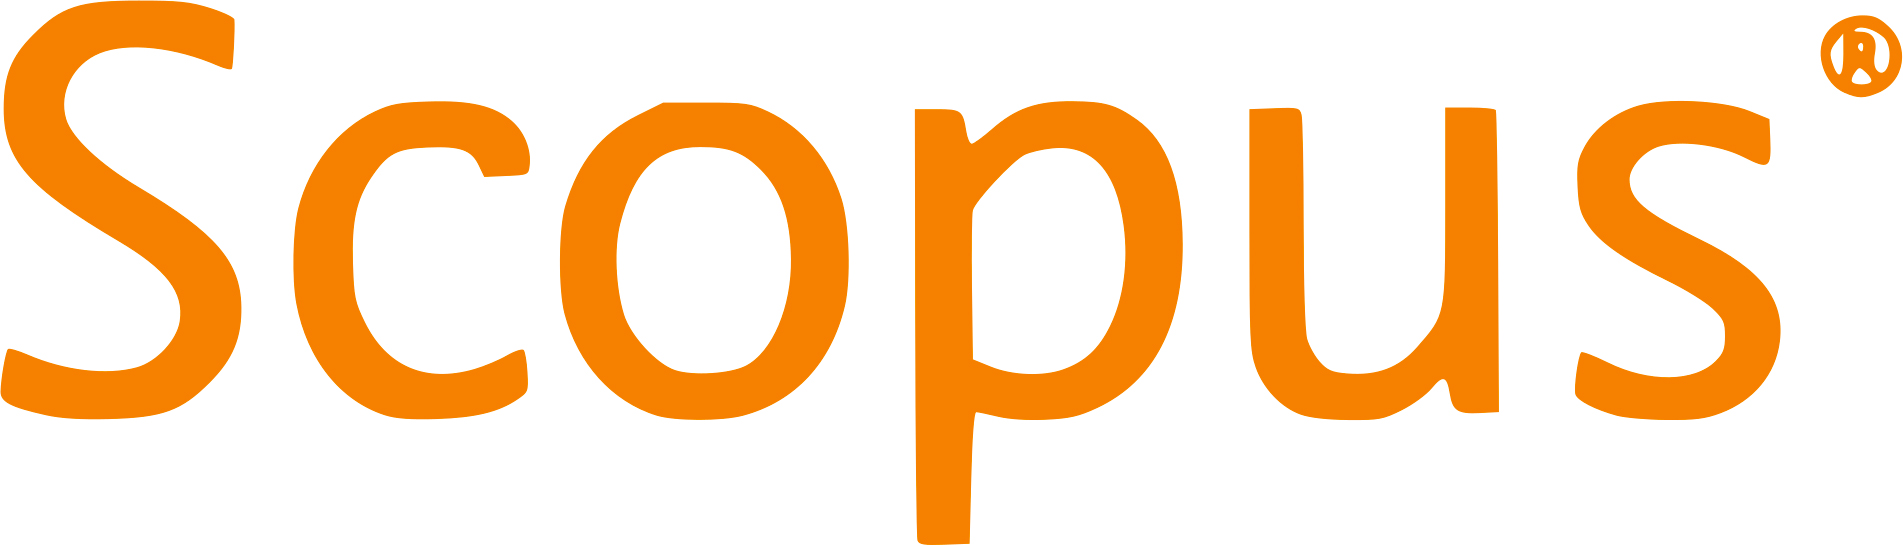 SCOPUS logo